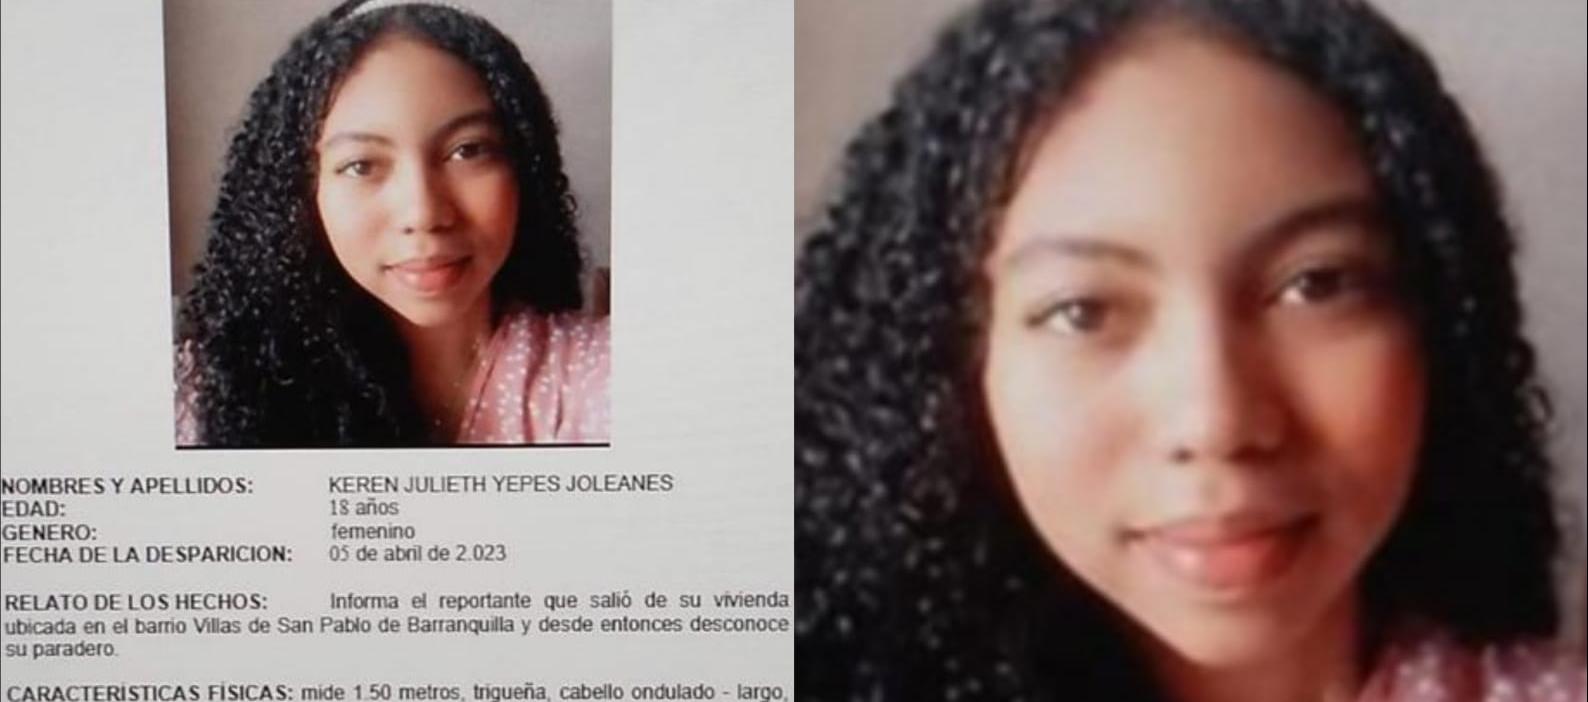  Keren Julieth Yepes Joleanes se encuentra desaparecida.